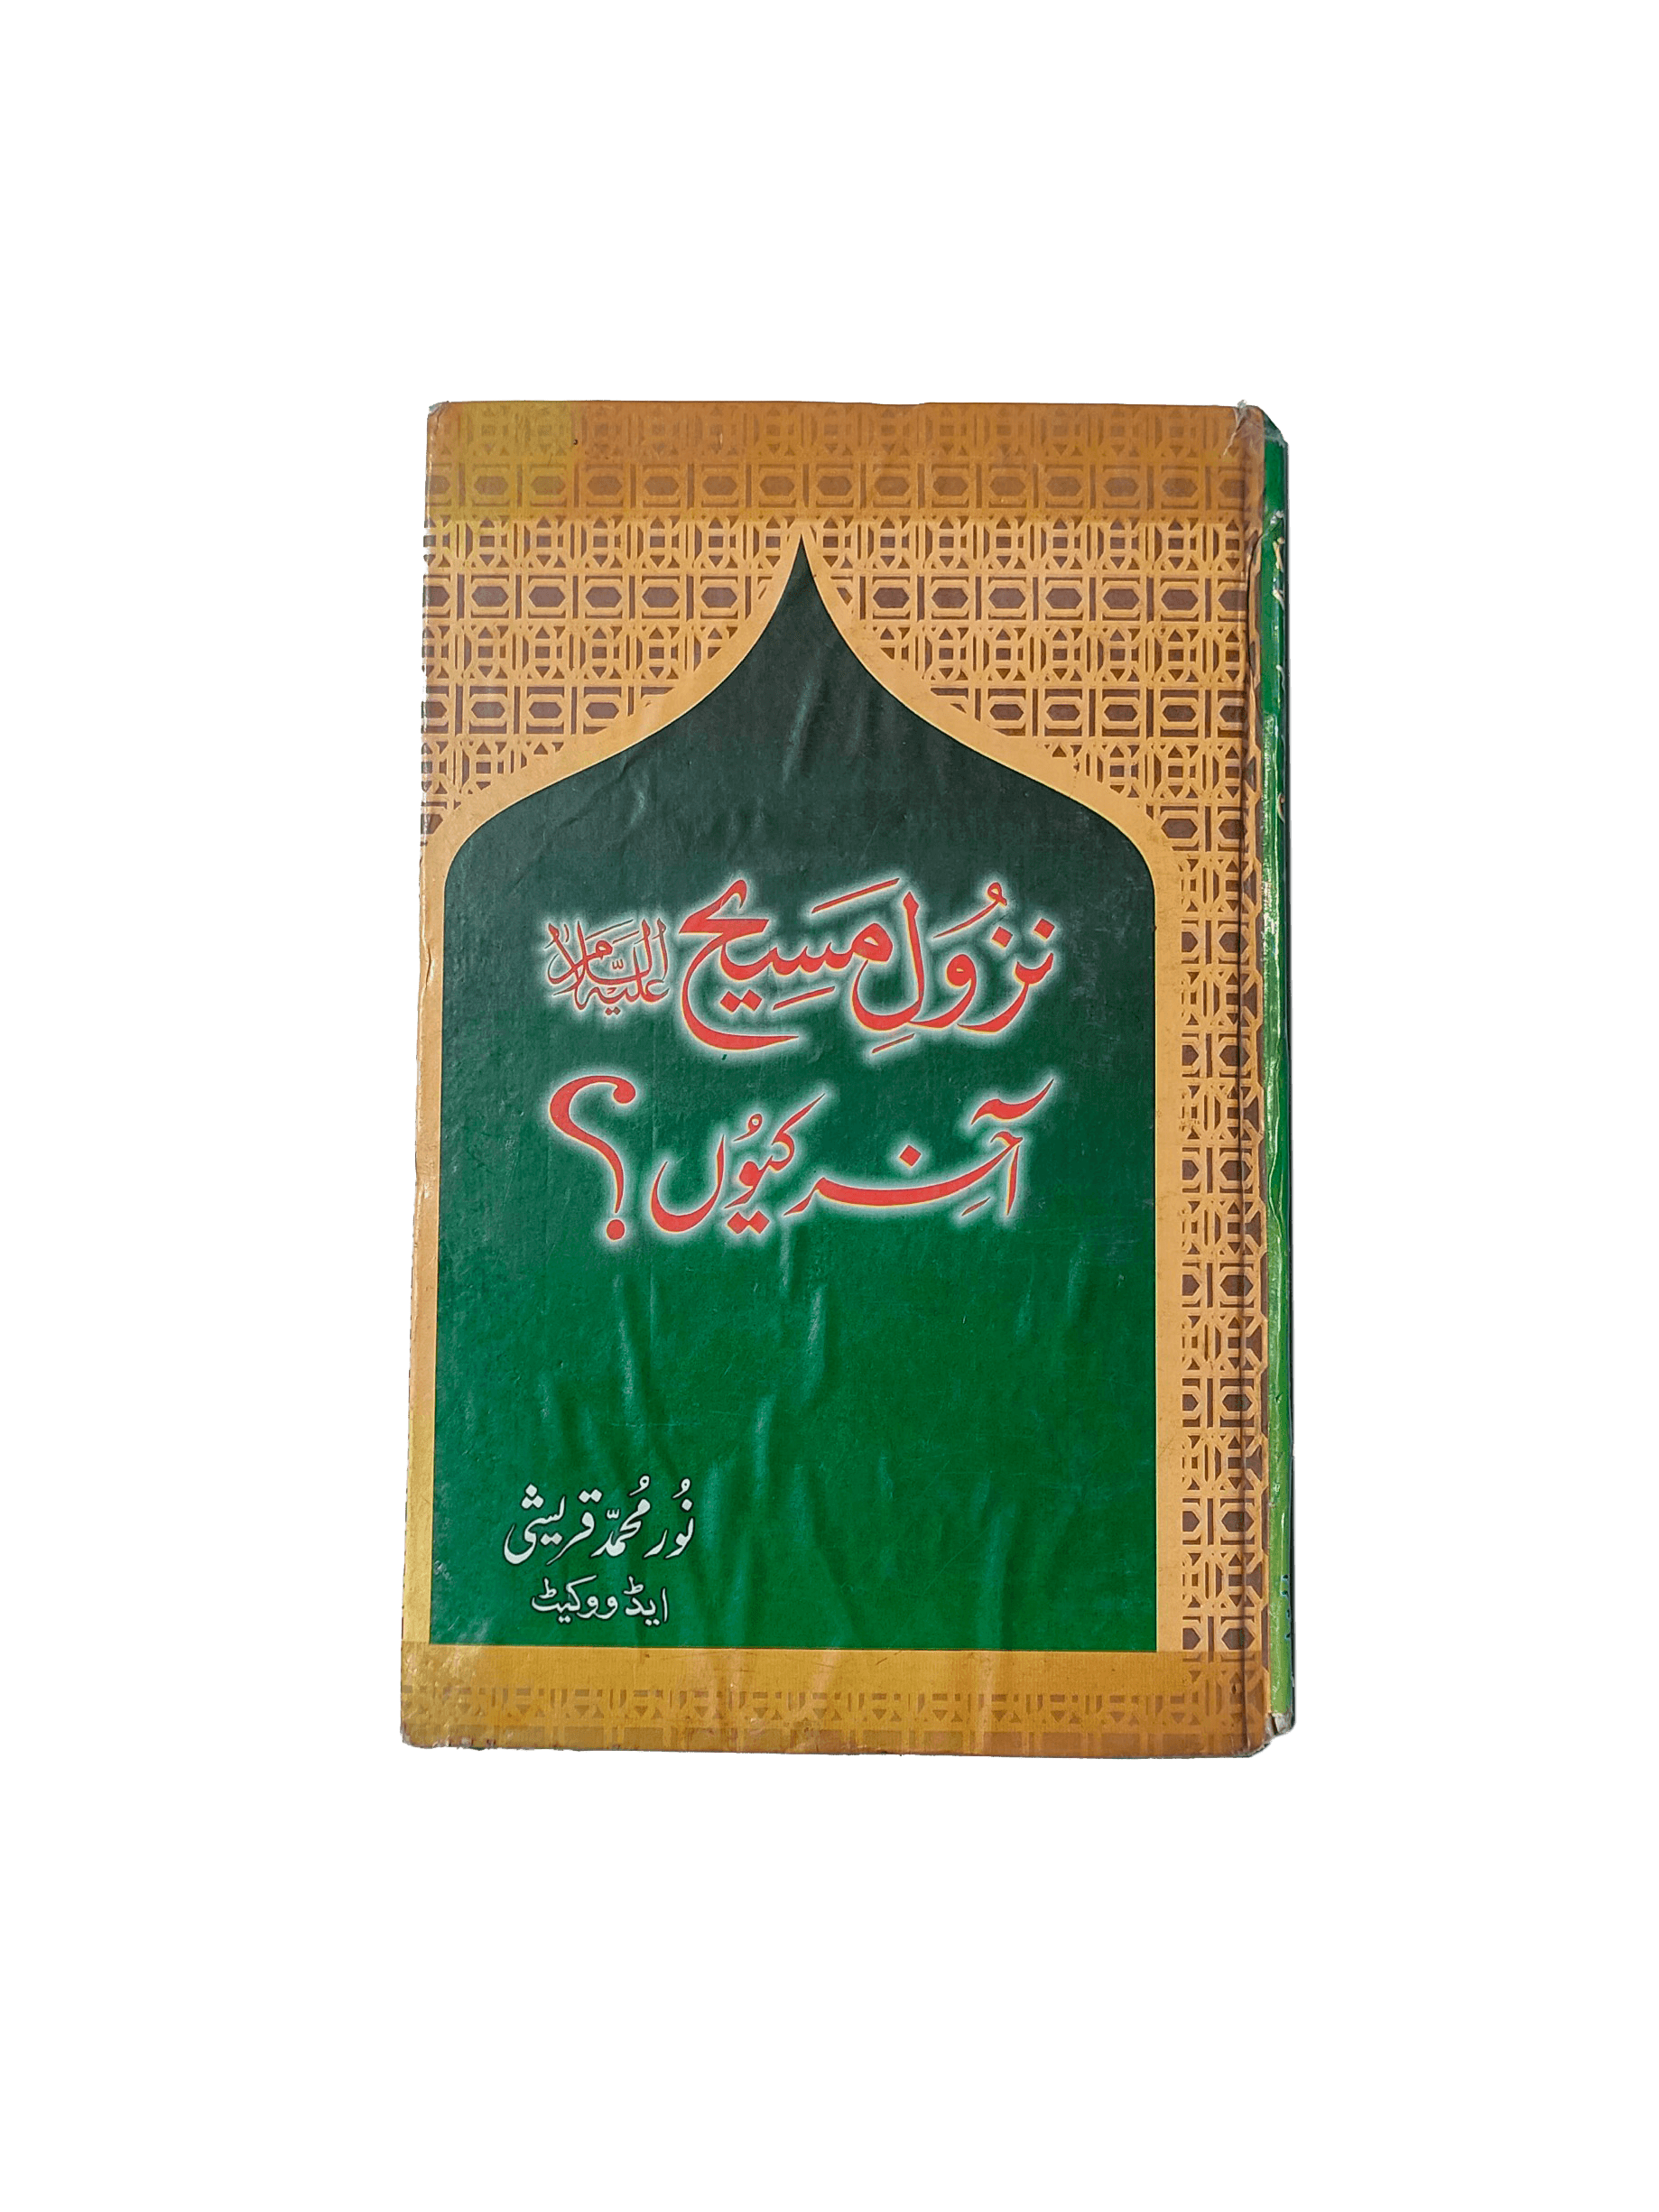 Nuzool-e-Masih Akhir Kyon (Why the Second Coming of the Messiah?) - KHAJISTAN™